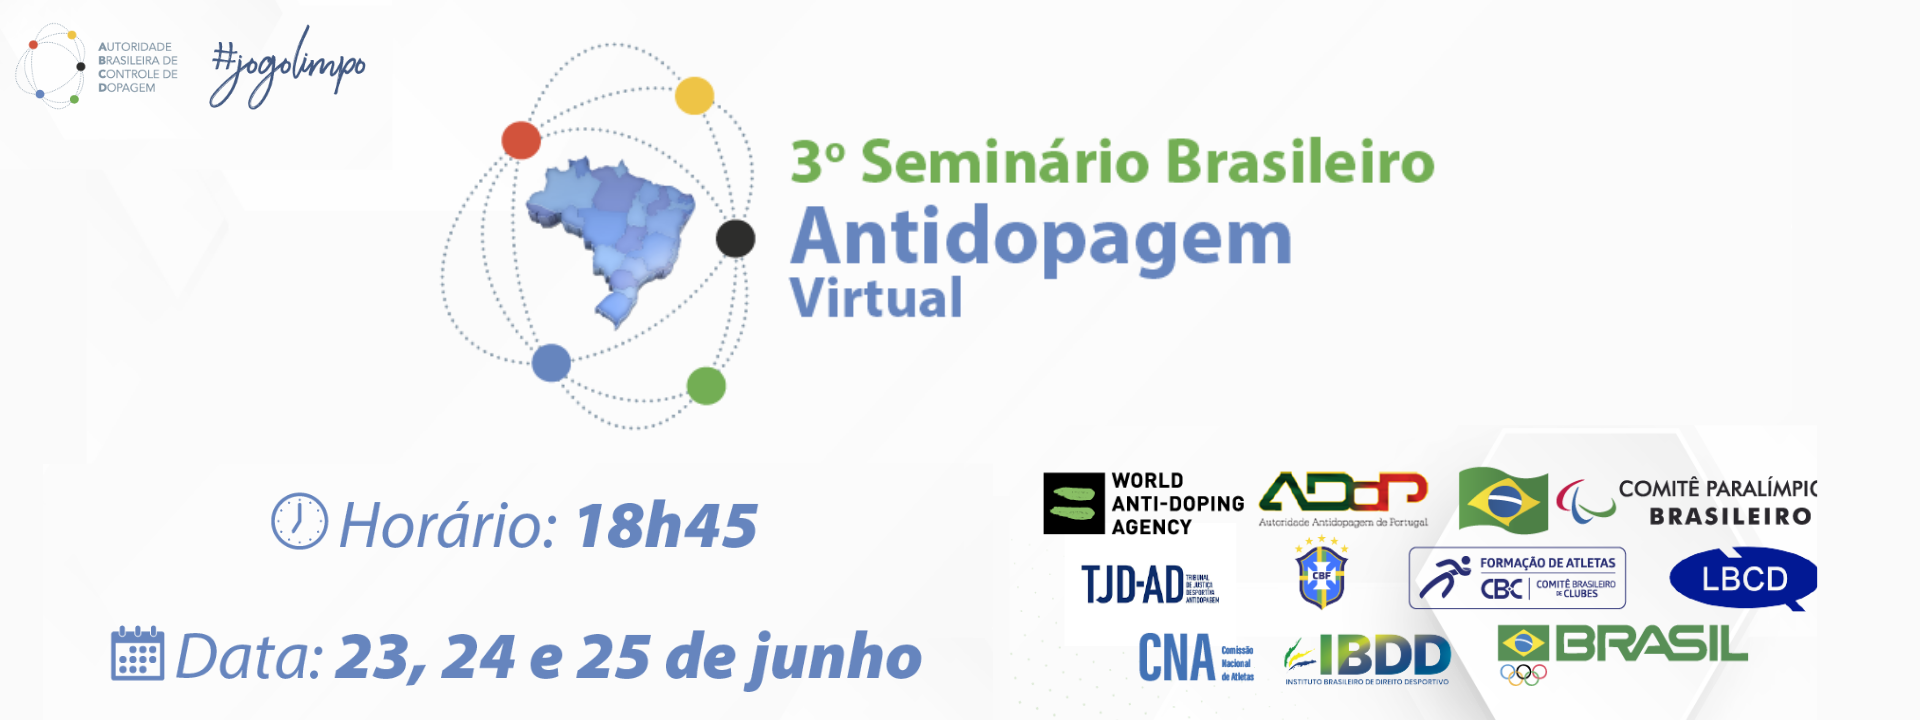 3º Seminário Brasileiro Antidopagem Virtual da ABCD acontece de 23 a 25 de junho